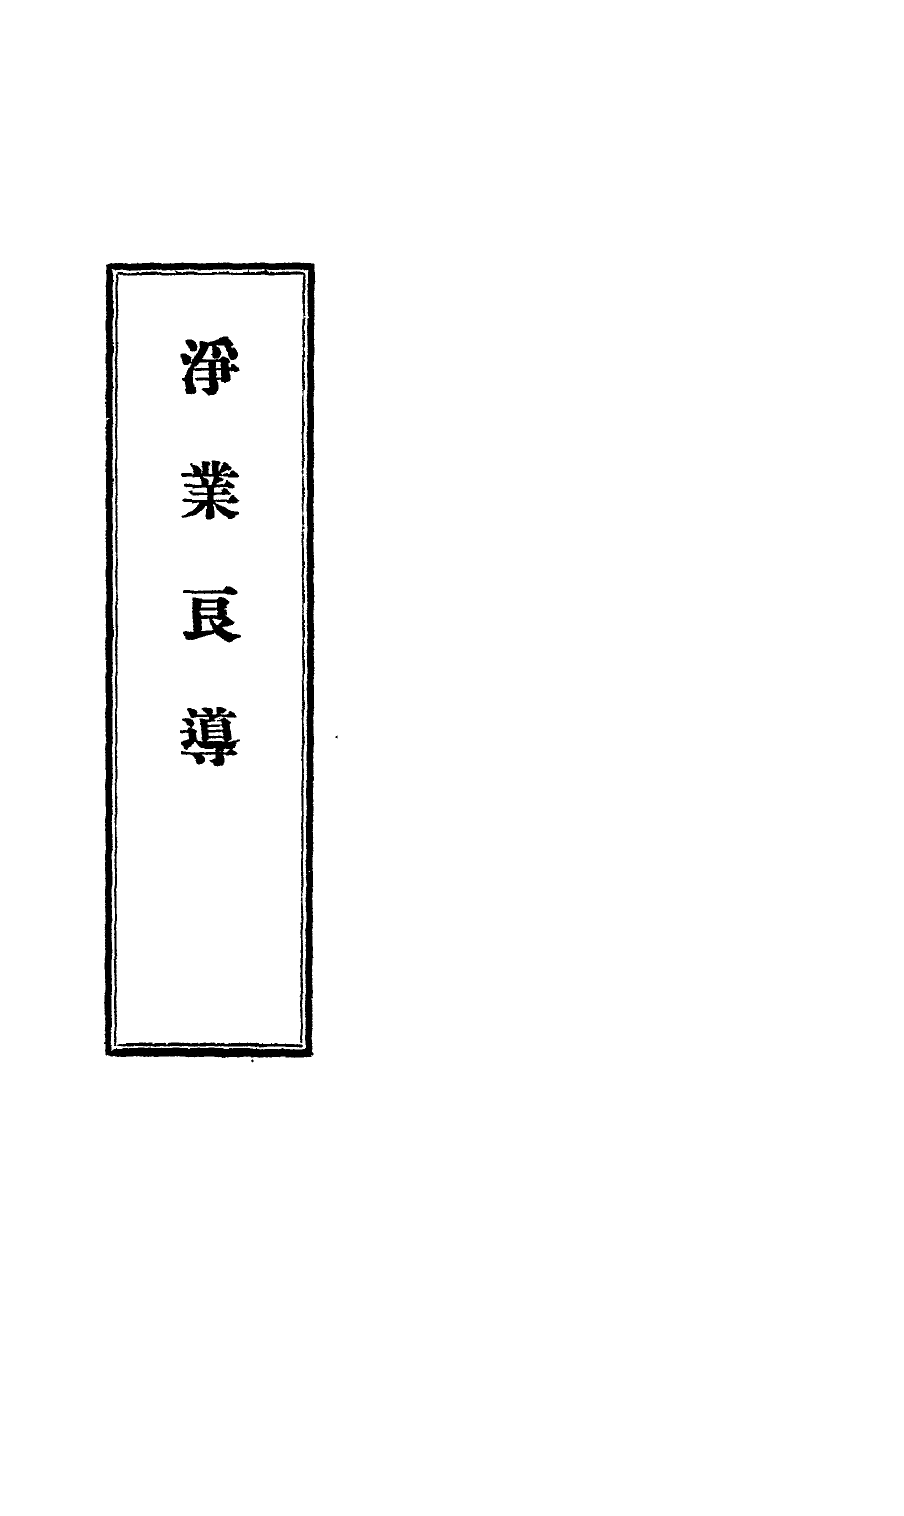 File:Jingye liangdao 1935.png